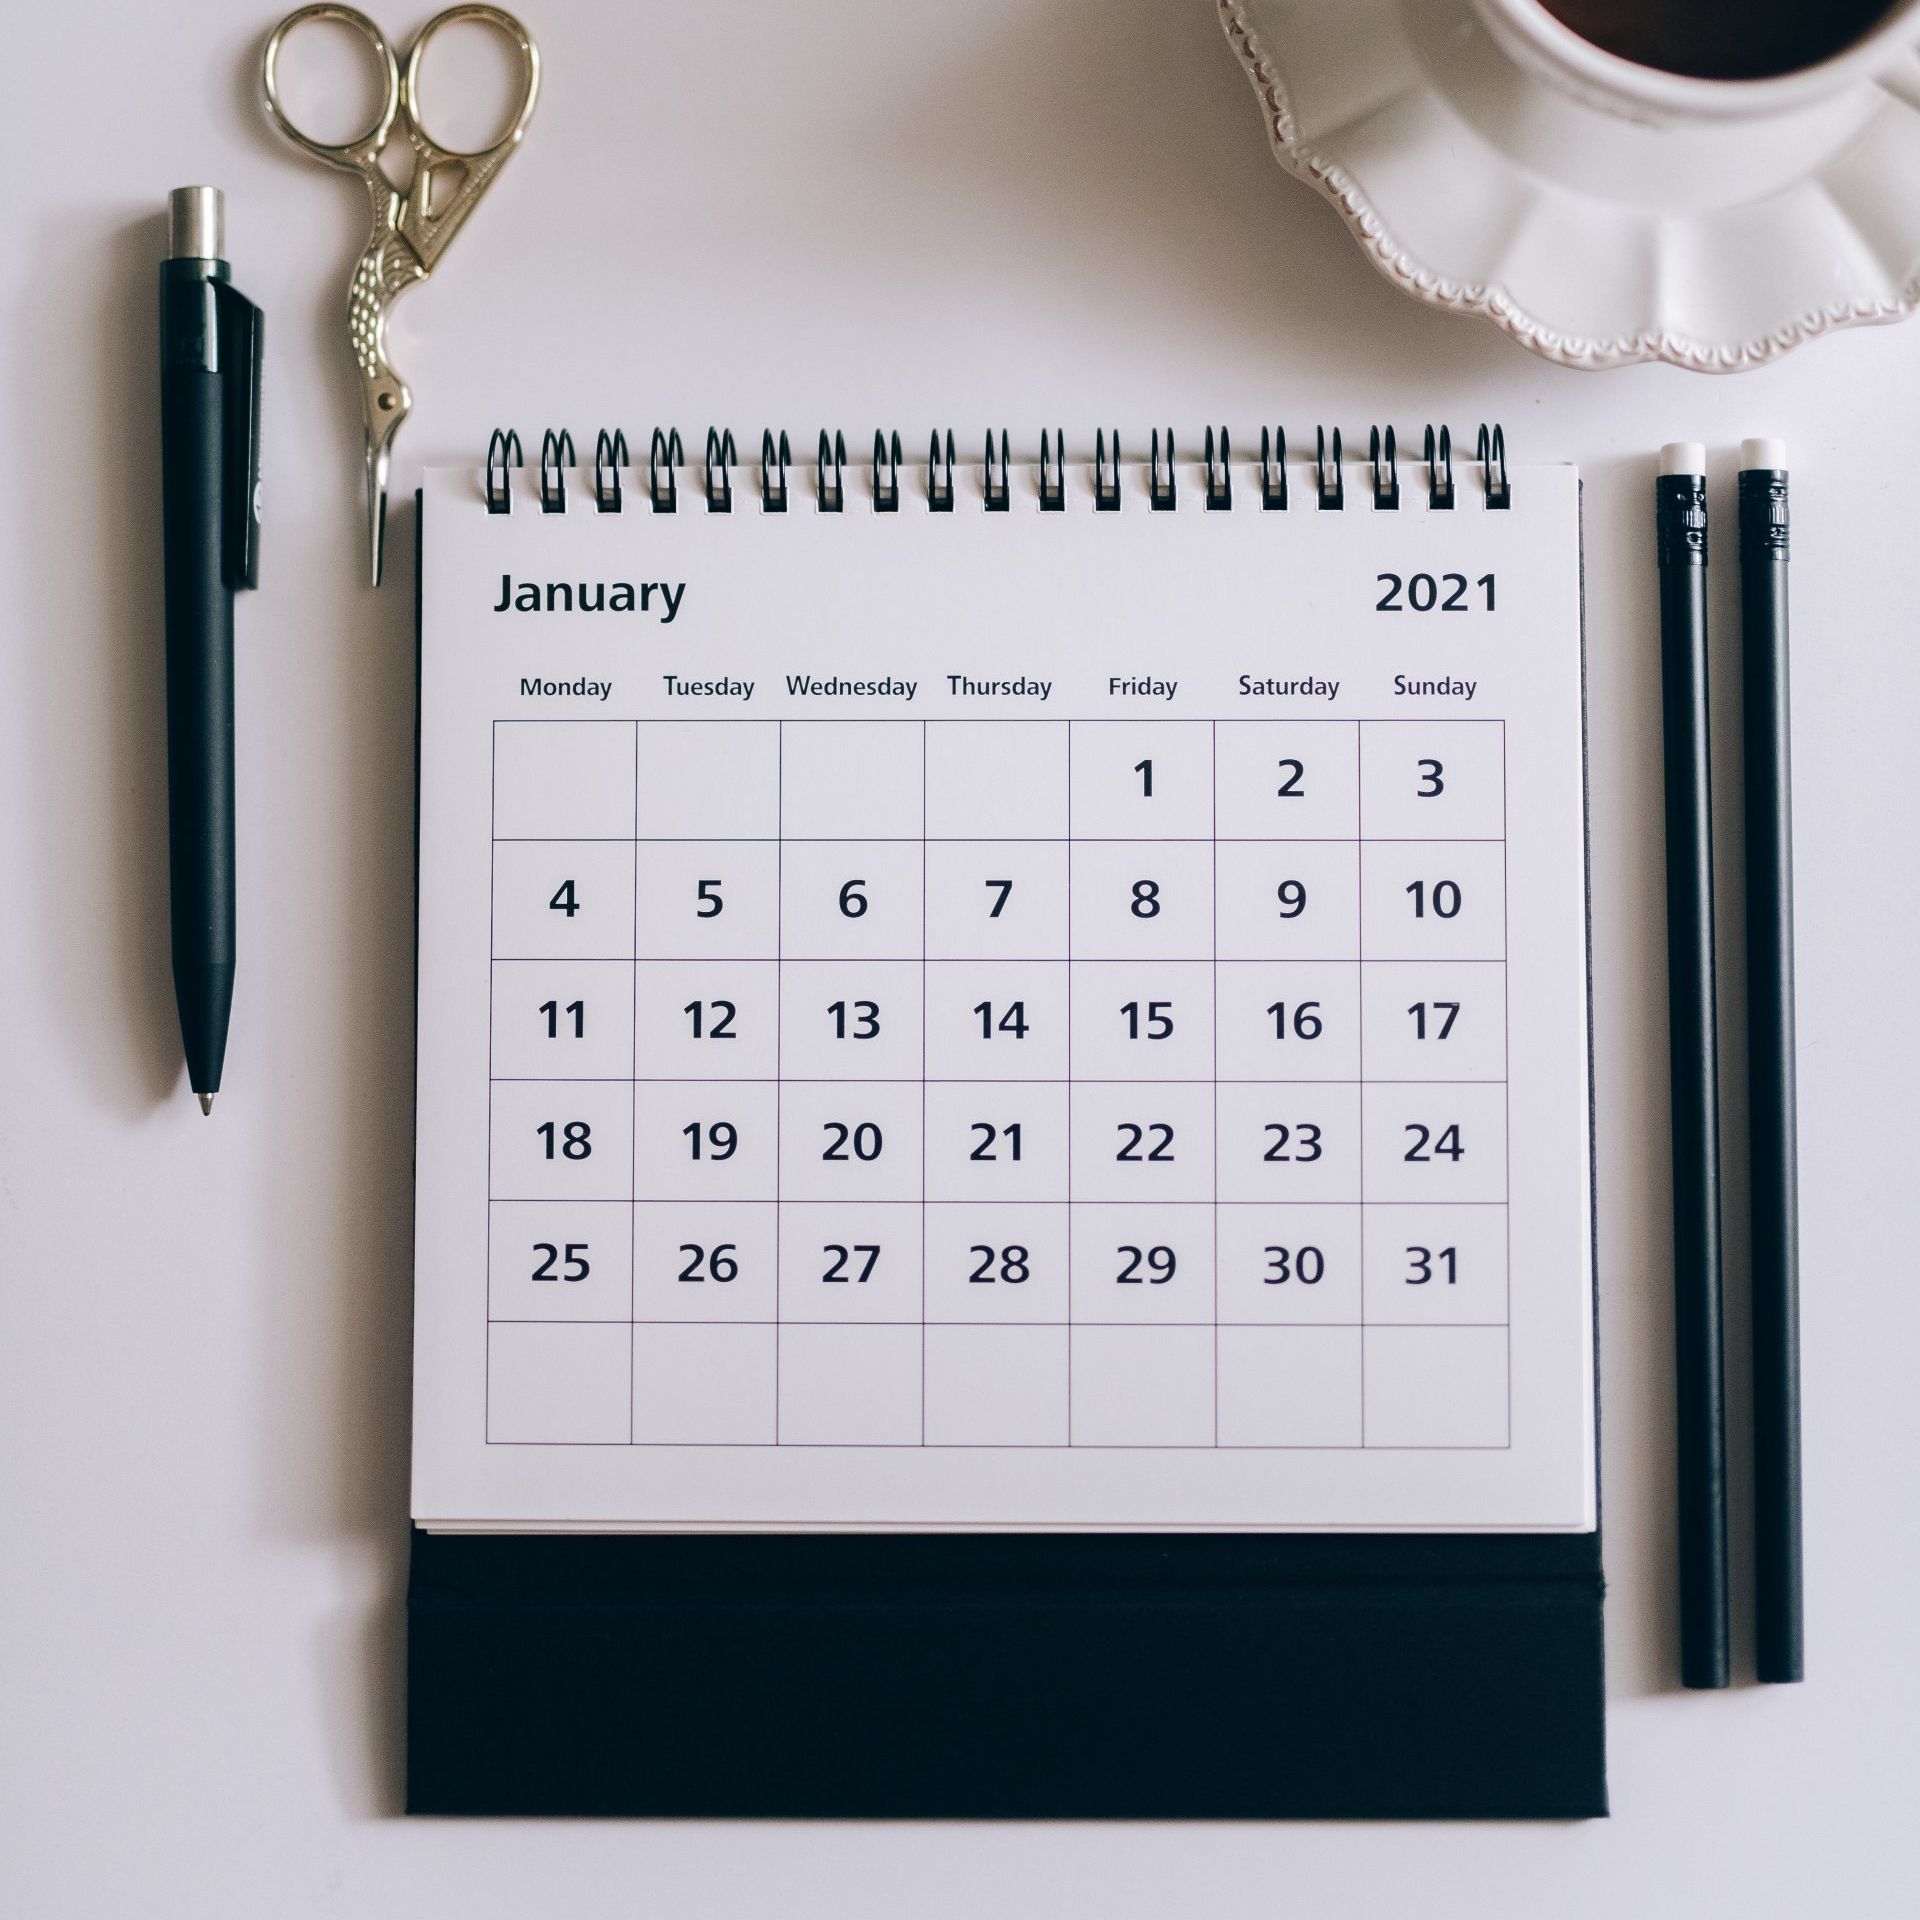 A calendar for january 2021 sits on a table